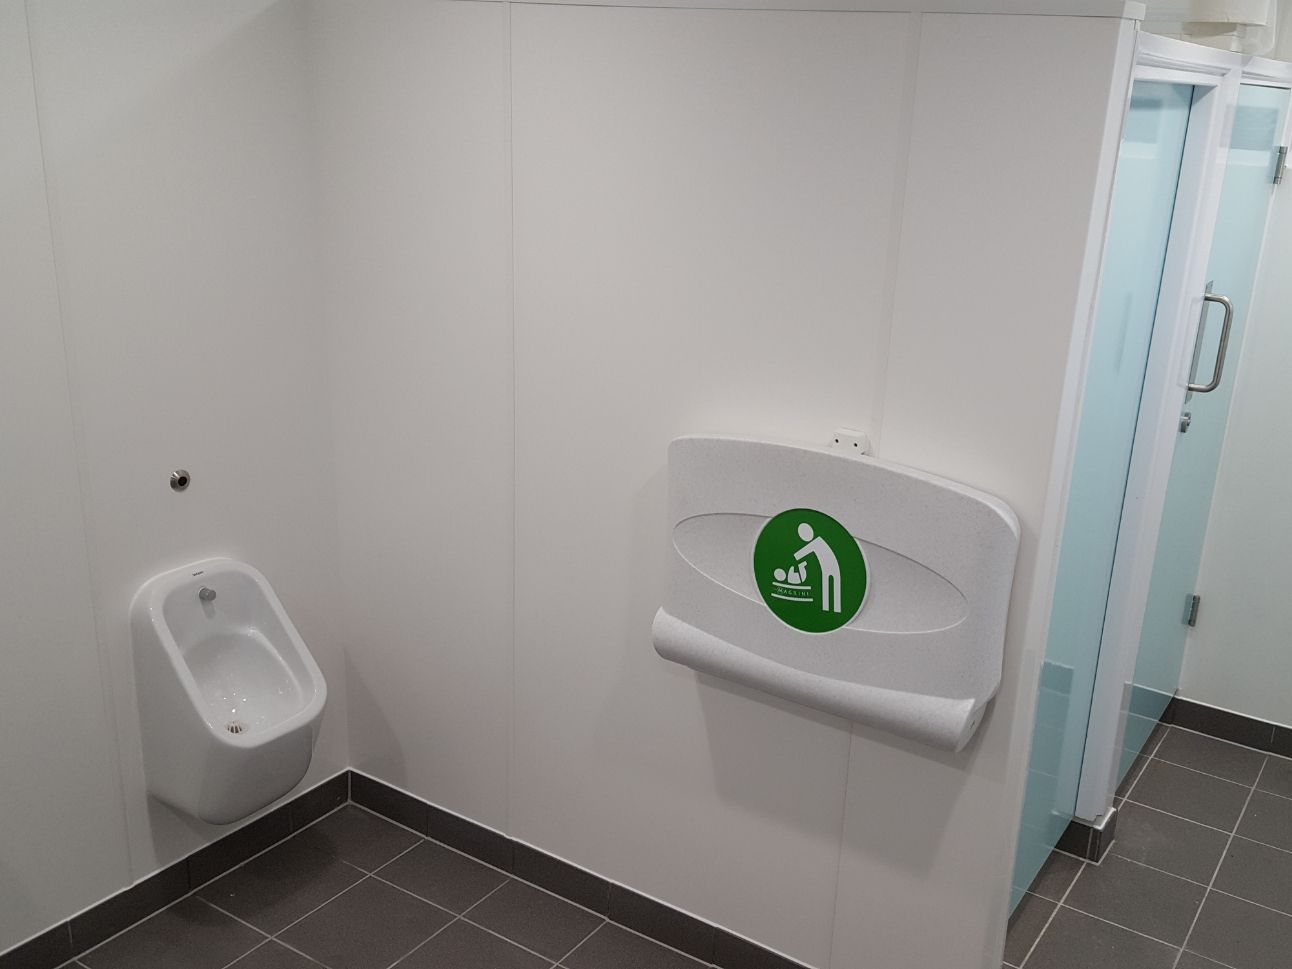 Corfe Castle Public Toilet | Refurbishment | Commercial Washrooms